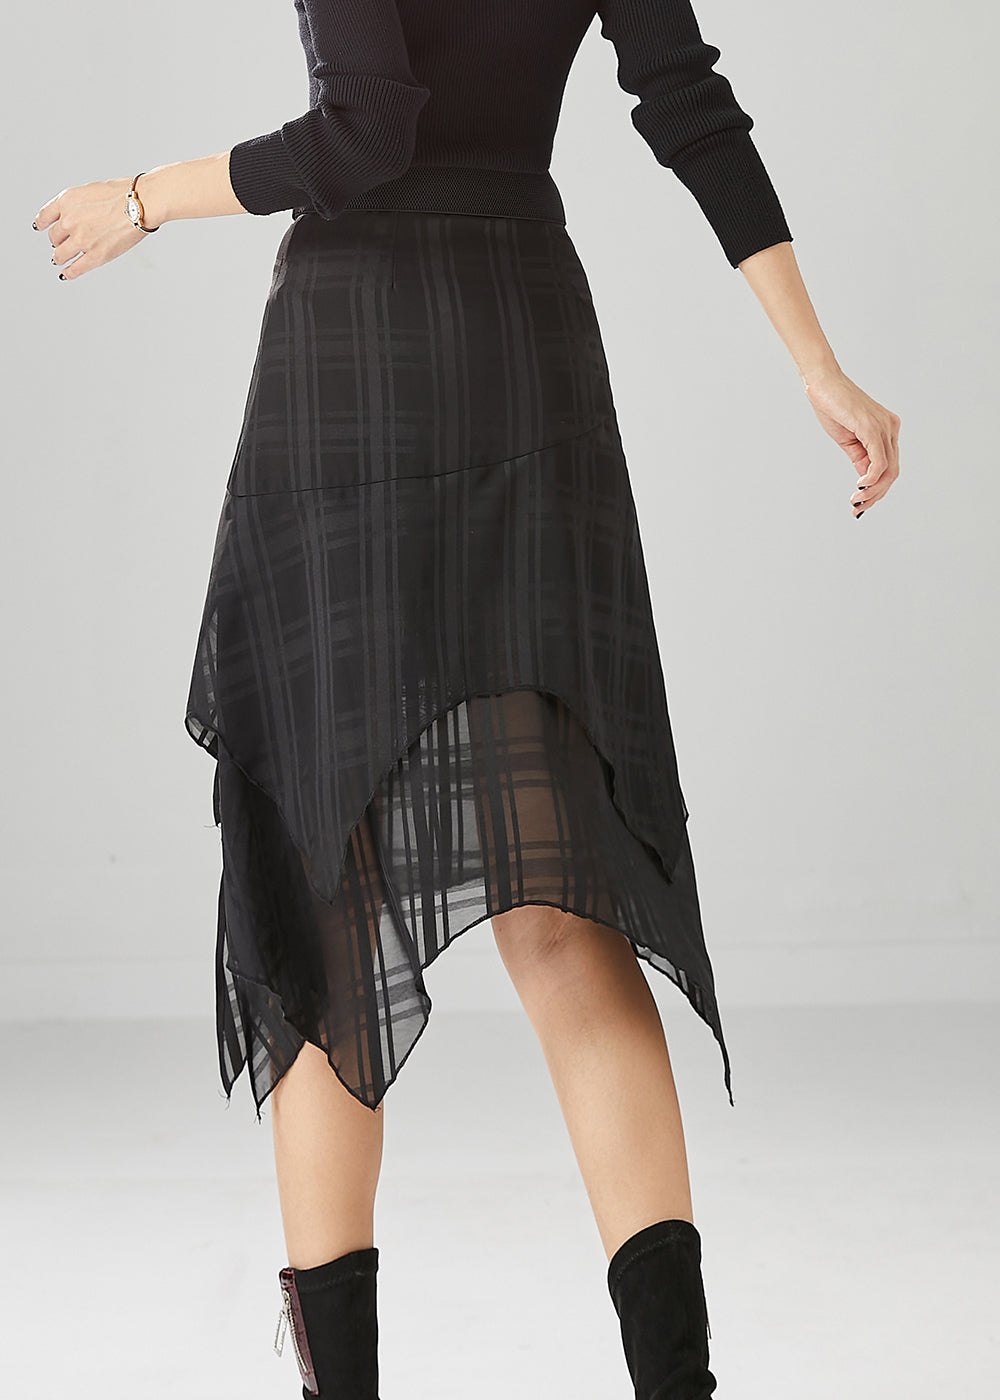 Stylish Black Asymmetrical Side Open Chiffon Skirt Summer